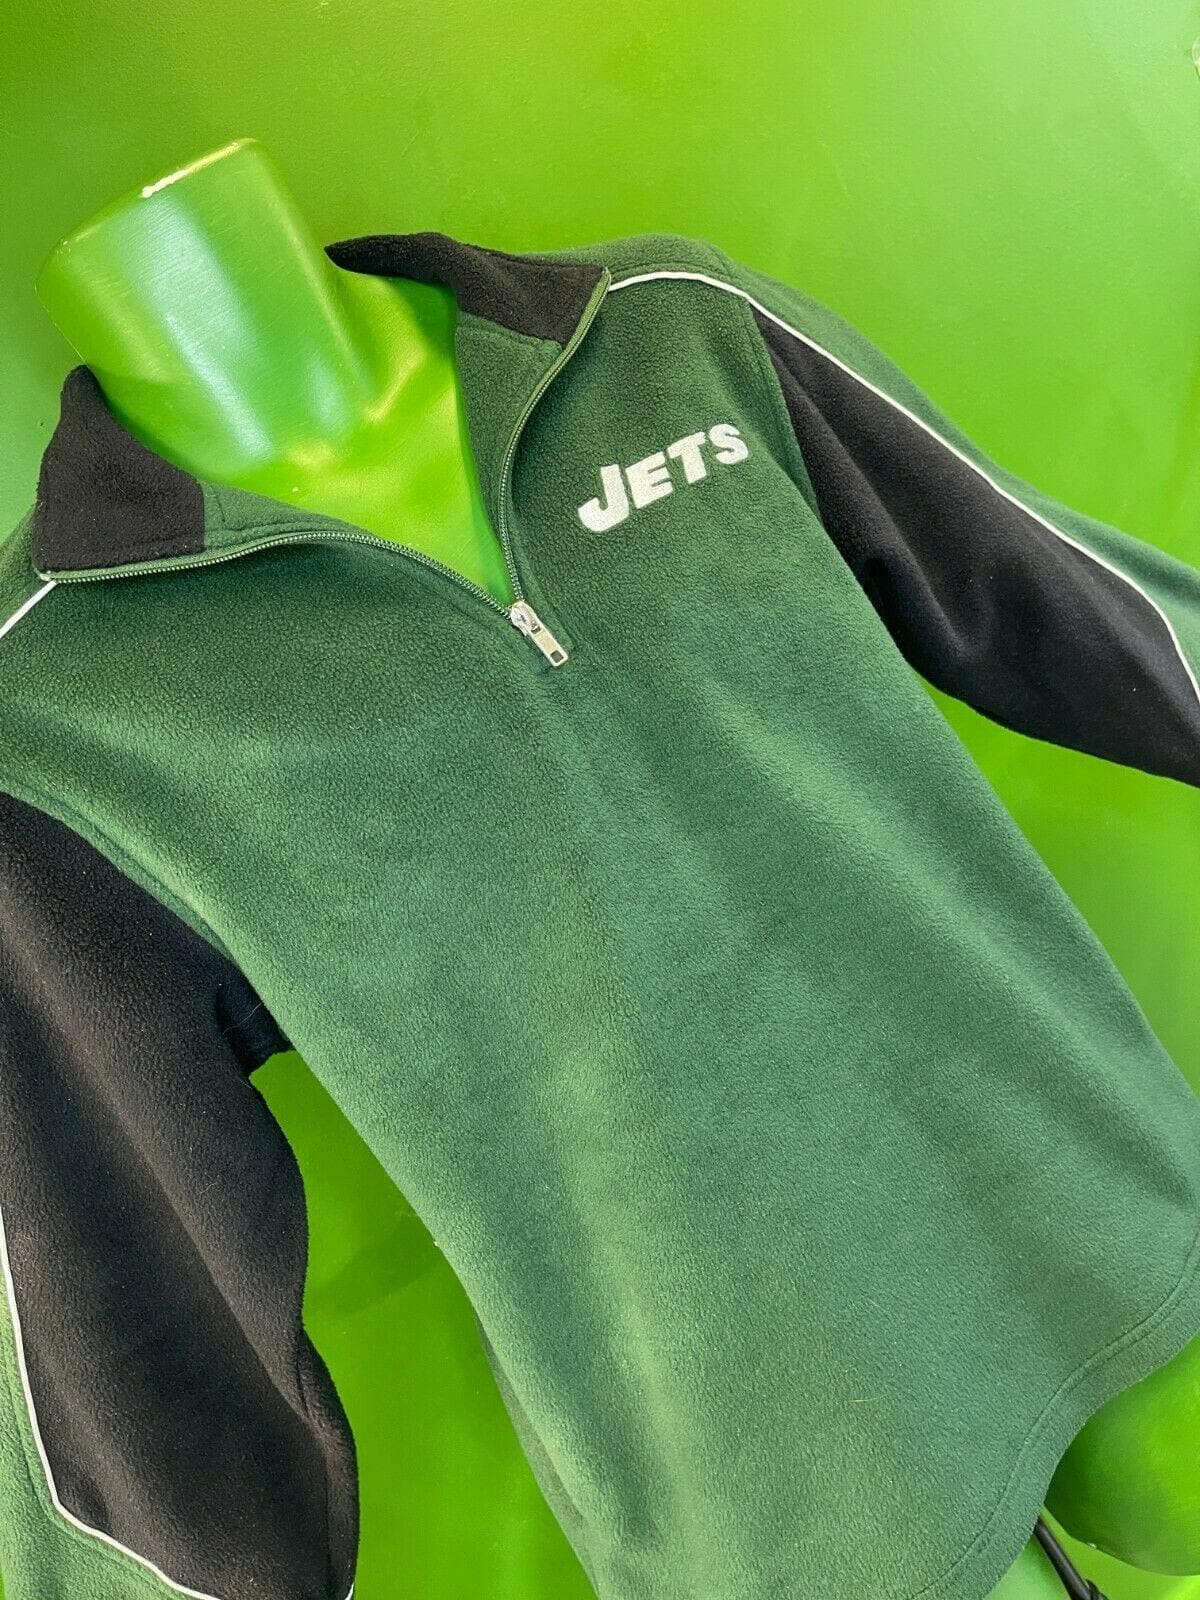 NFL New York Jets Reebok Fleece 1-4 Zip Pullover Jacket Youth M 10-12